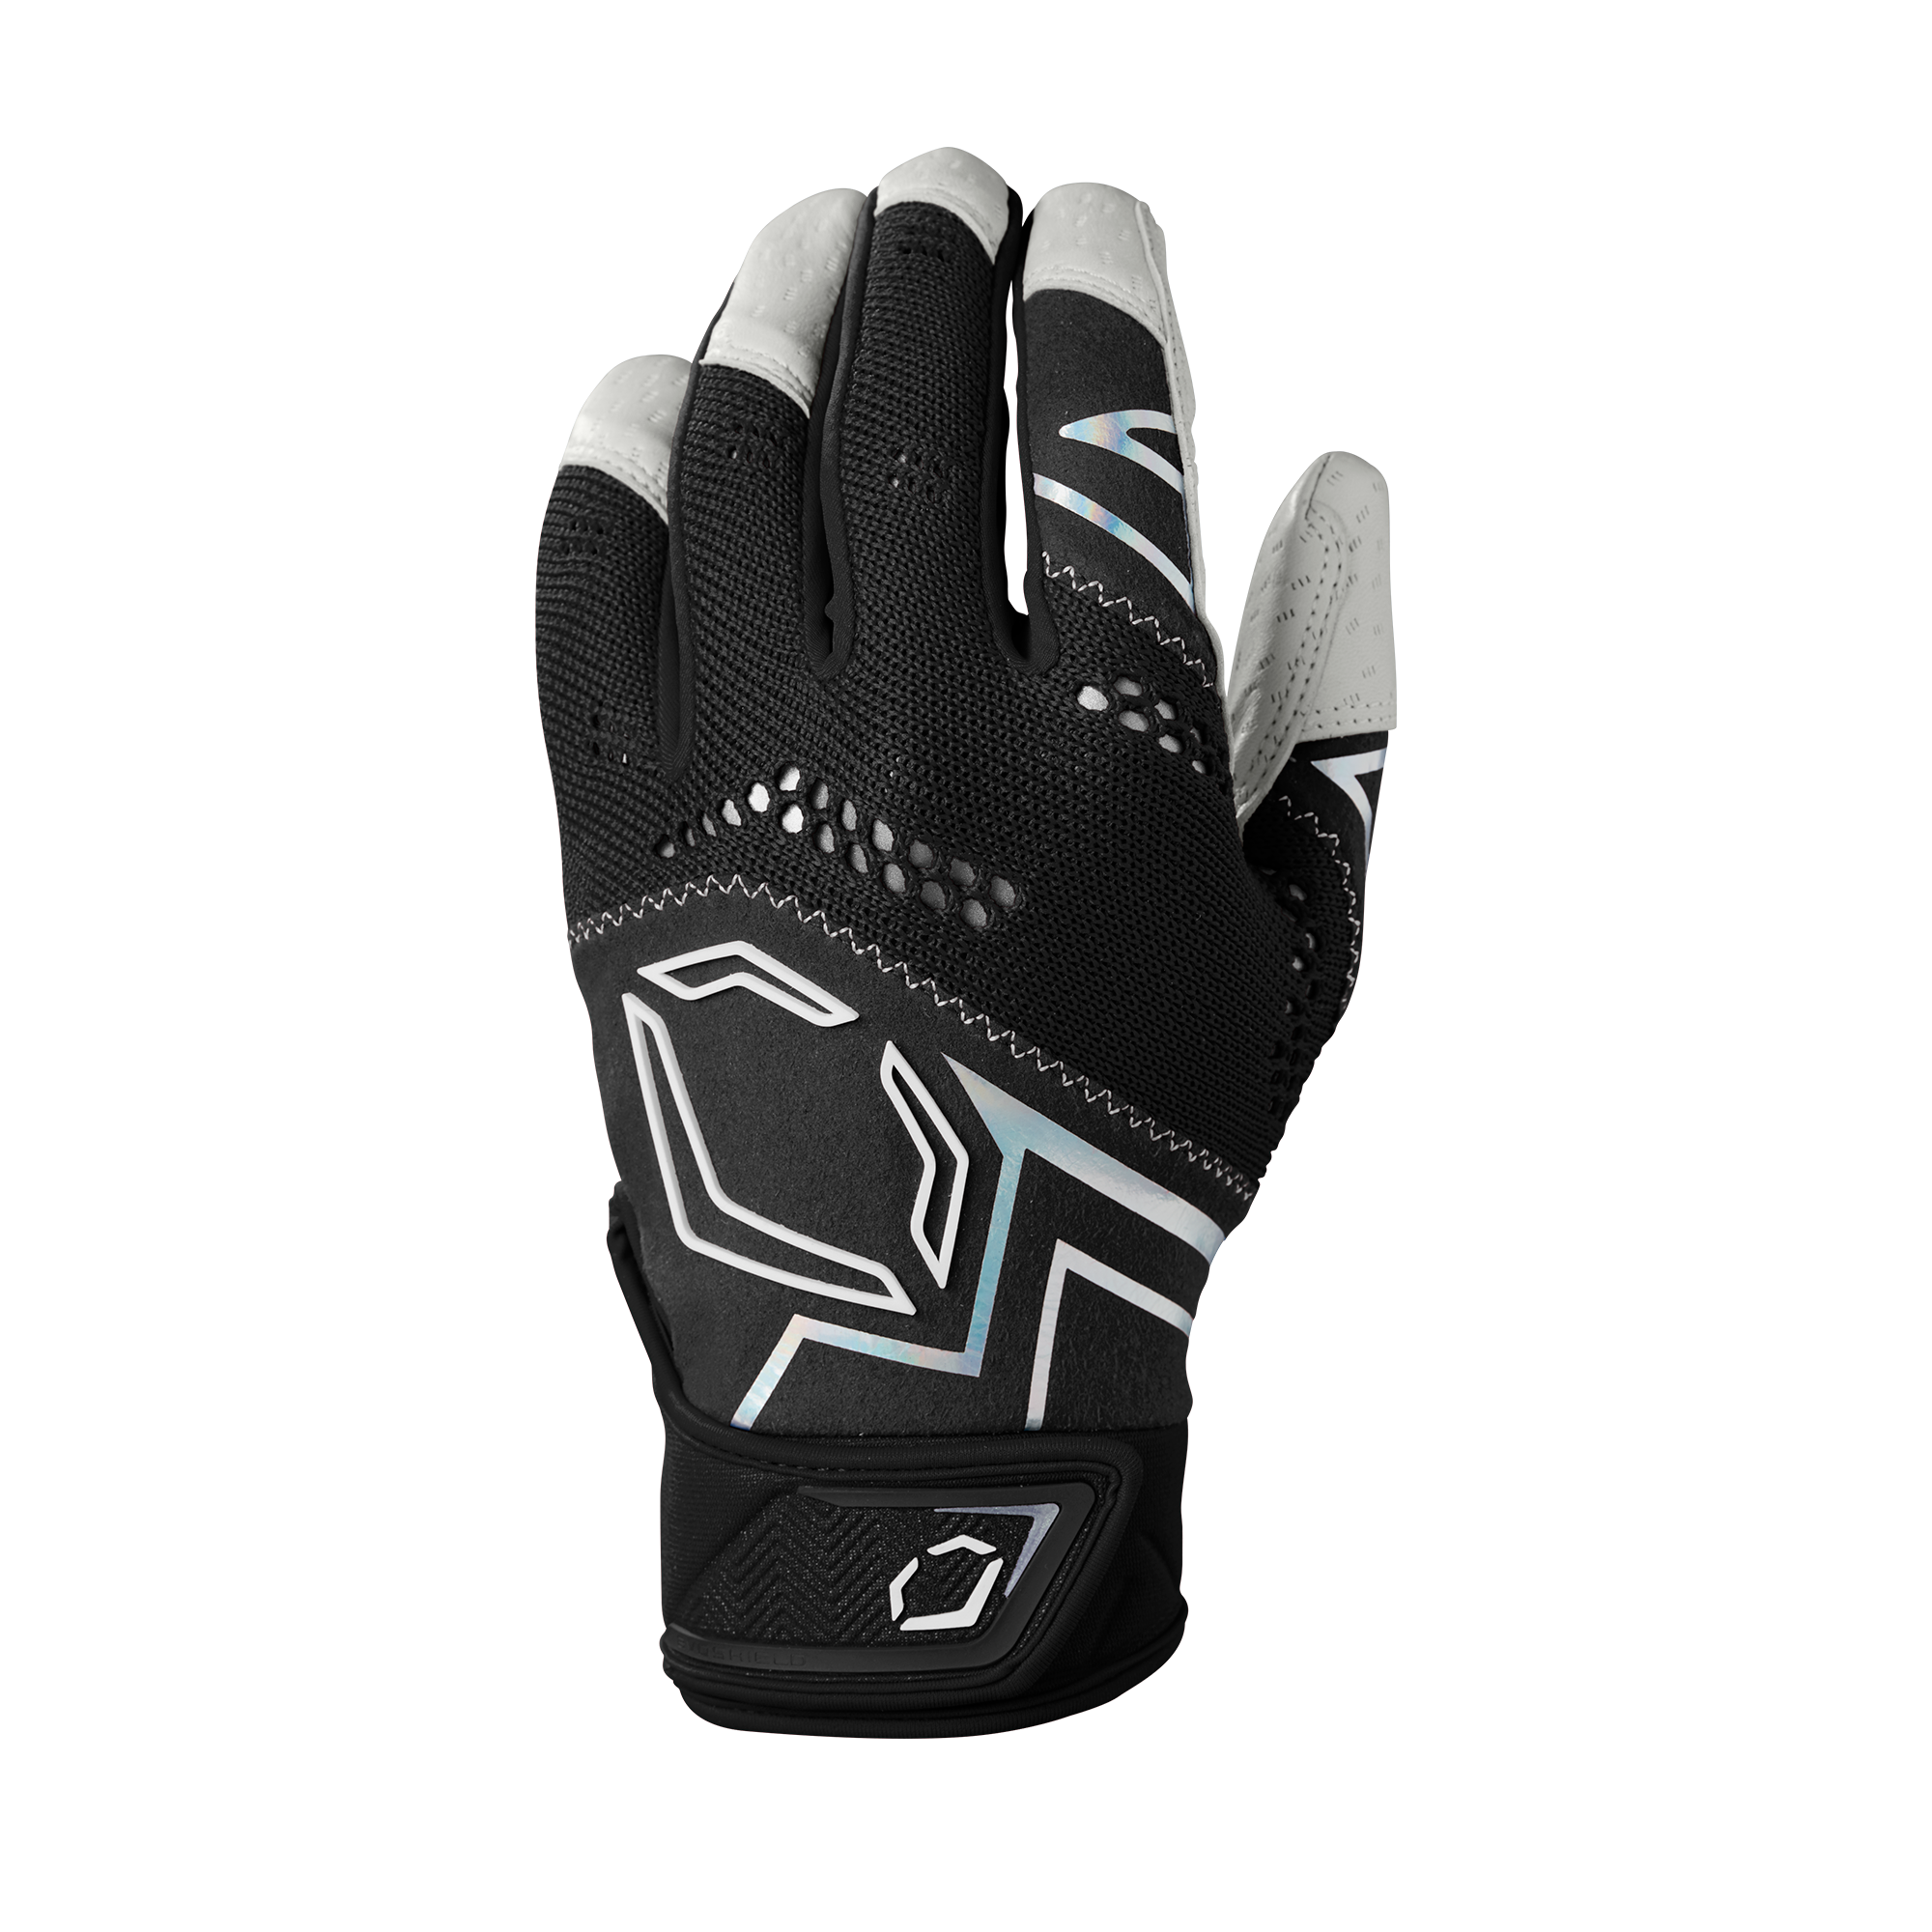 Evoshield Adult PRO-SRZ V2 Batting Gloves Black